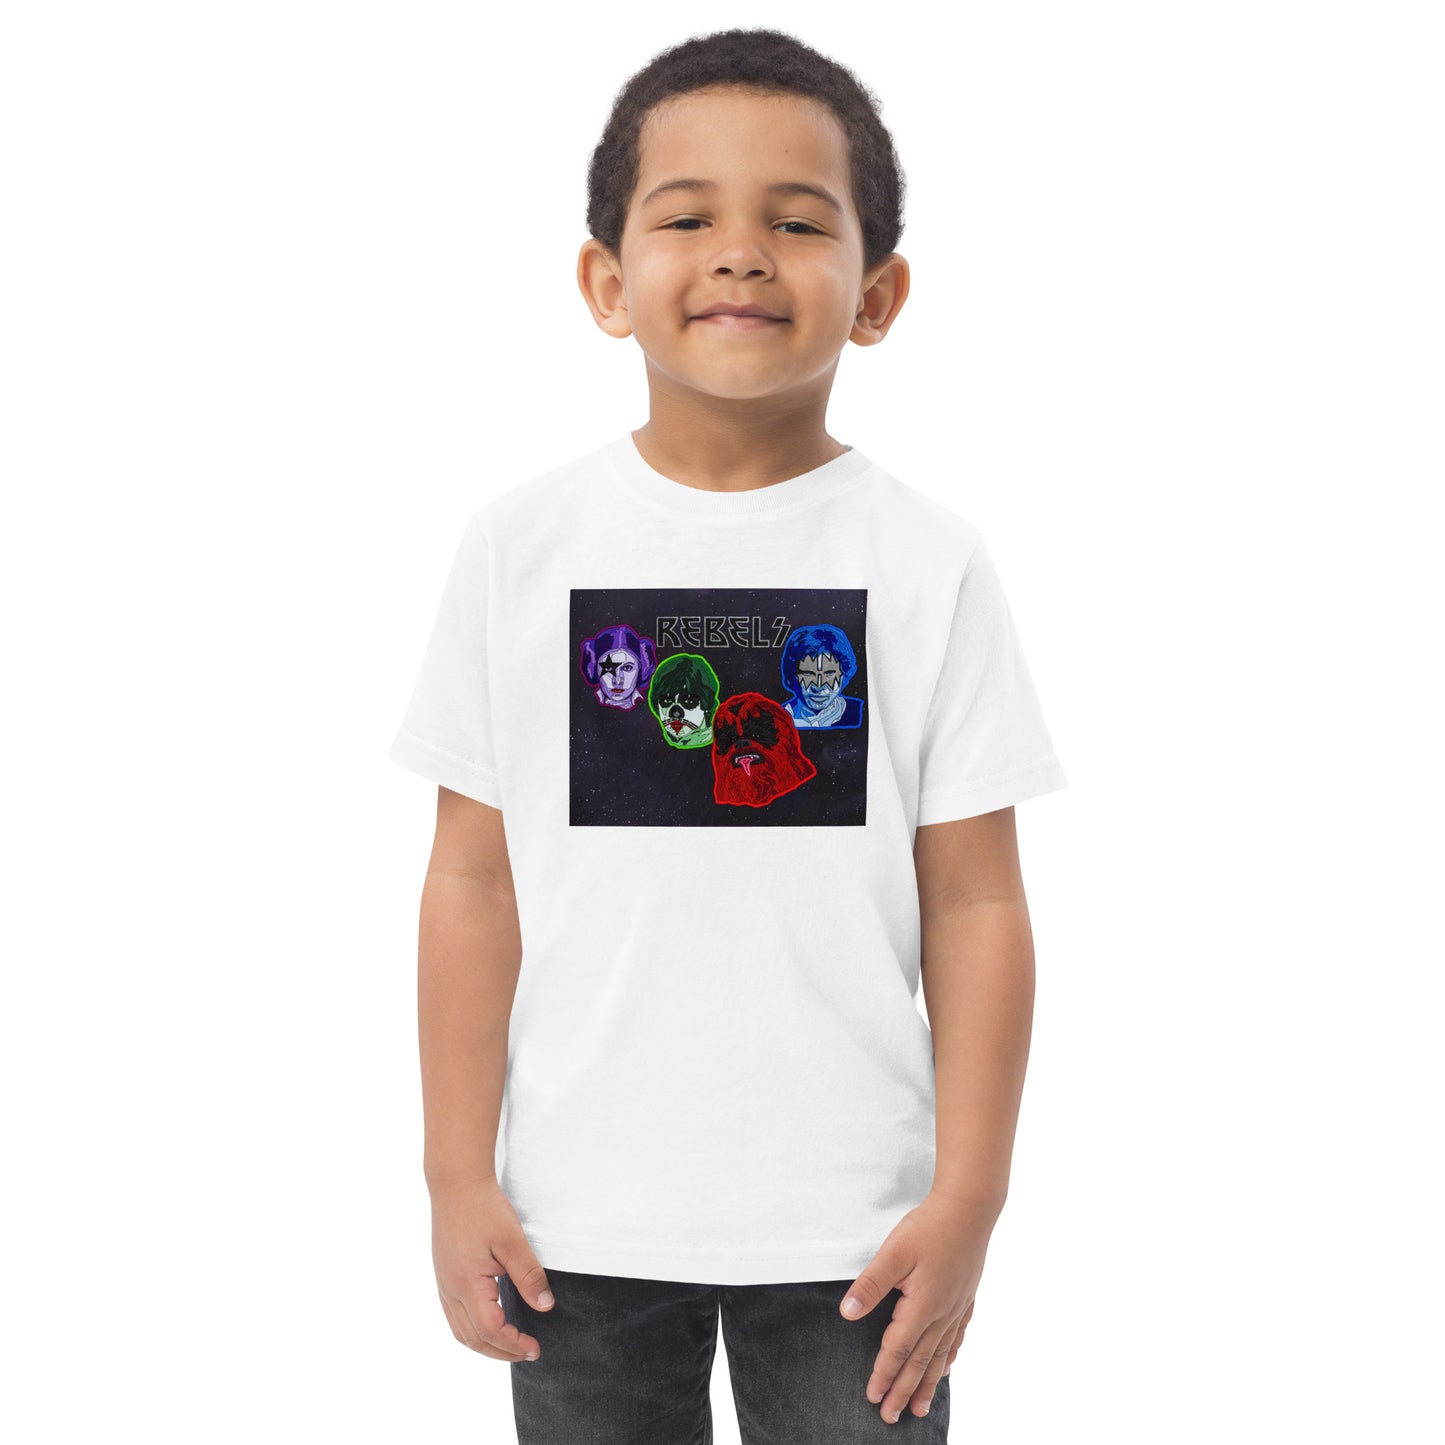 Rebels - Toddler jersey t-shirt